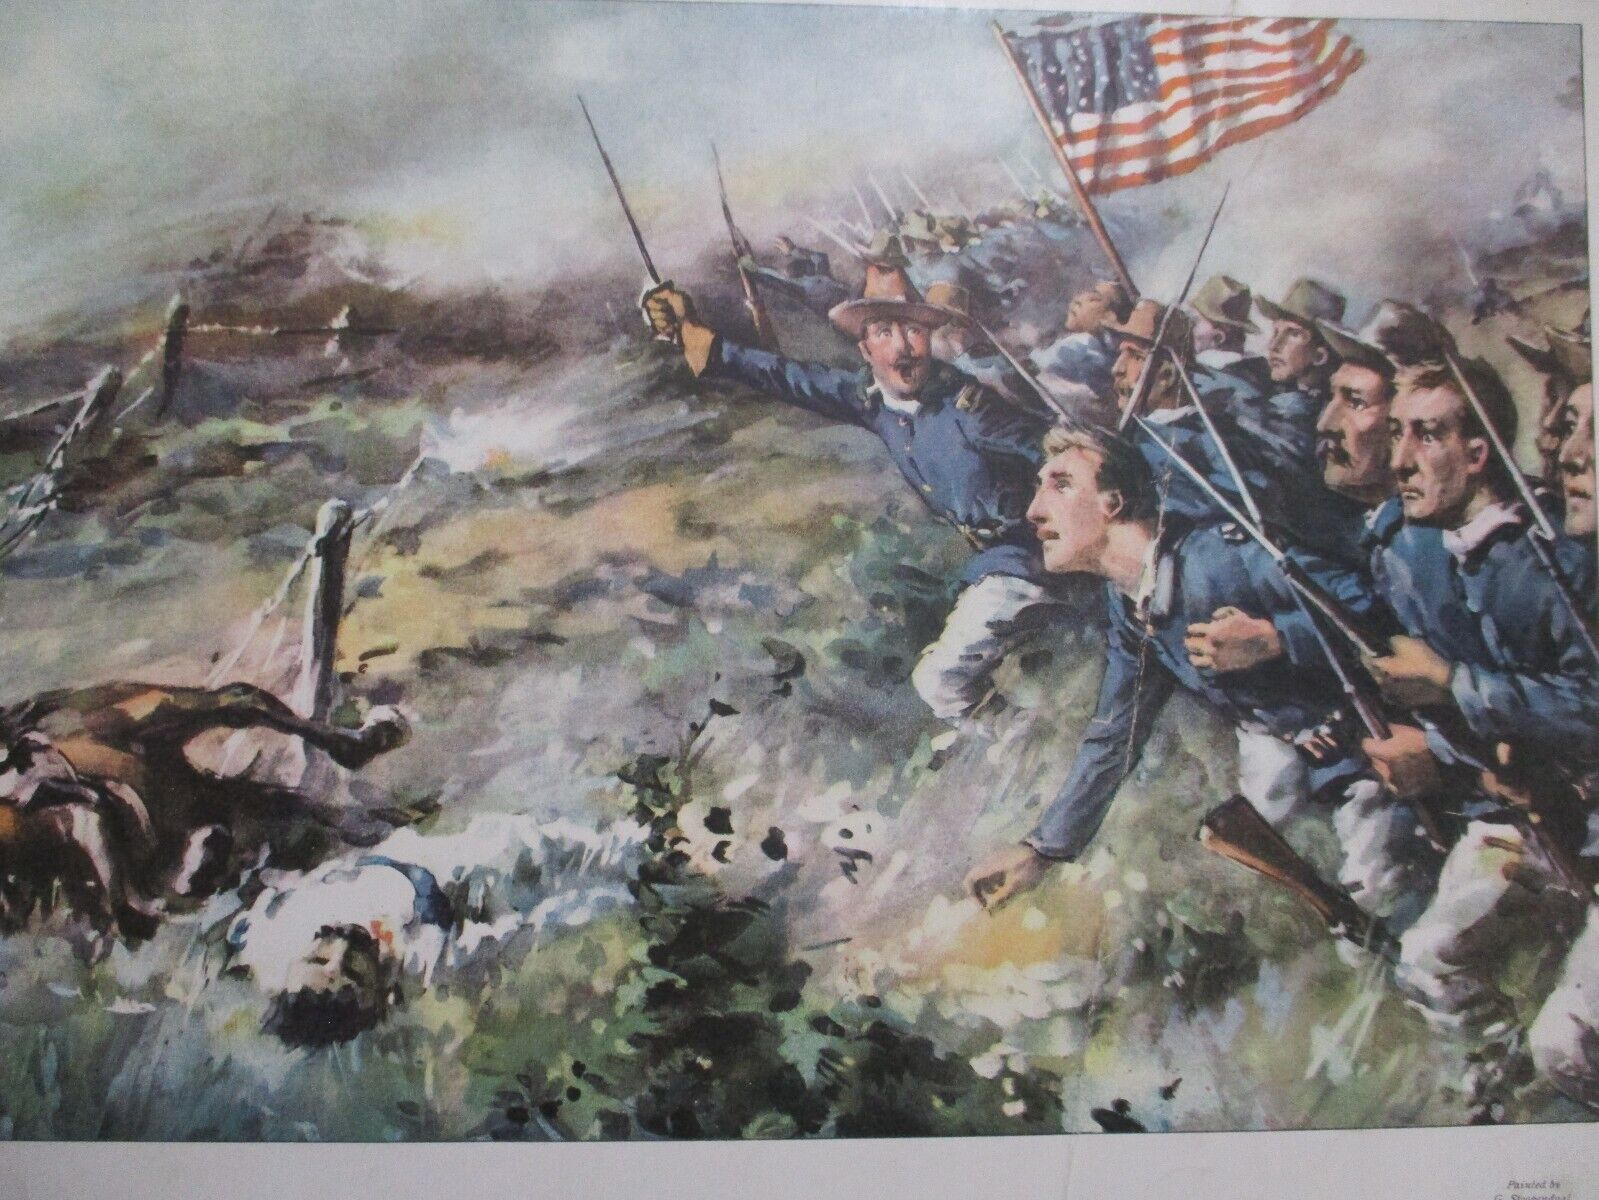 1898 Spanish American War Print - U.S. 6th & 16th Troops Charge Up San Juan Hill